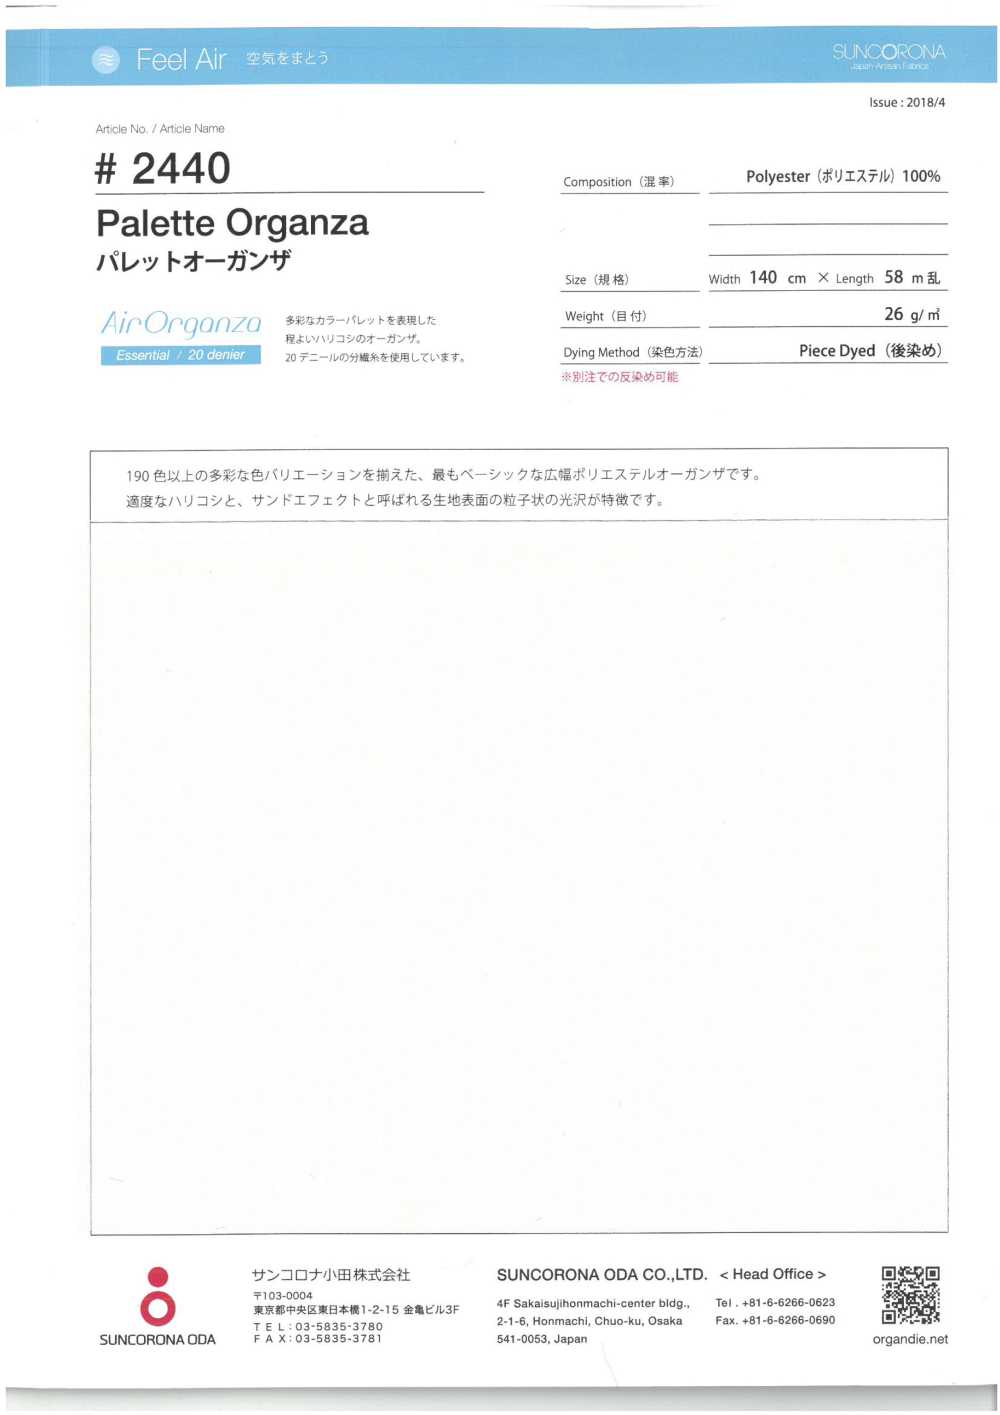 2440 Palette Organza[Textilgewebe] Suncorona Oda